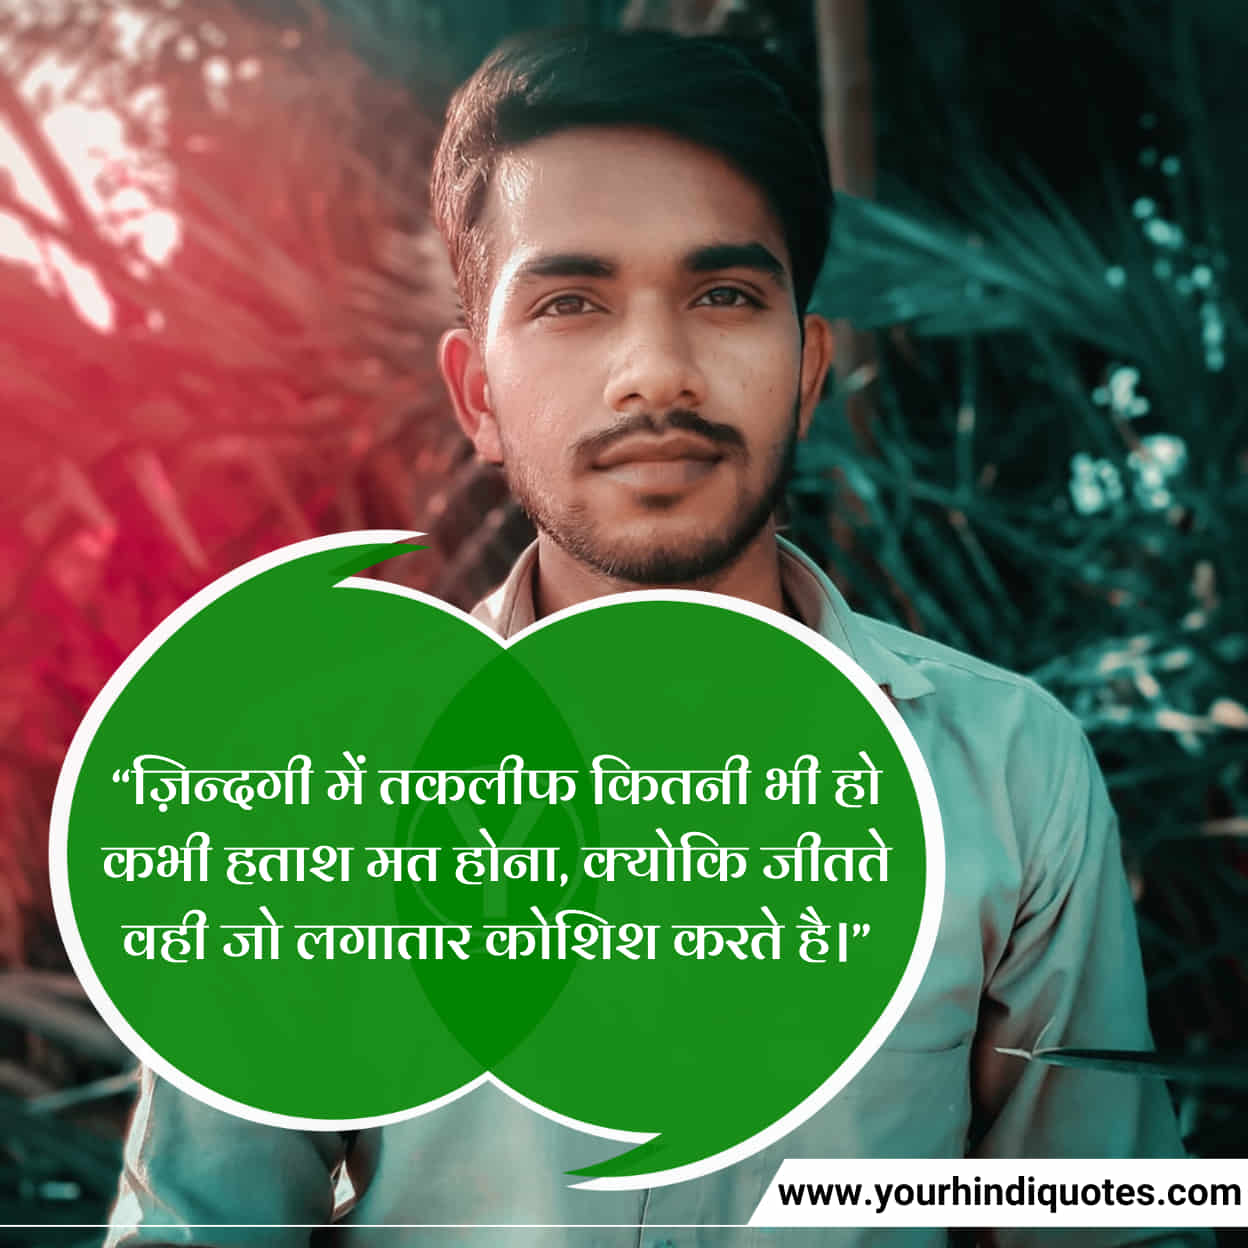 Inspirational Hindi Quotes For Students In Hindi